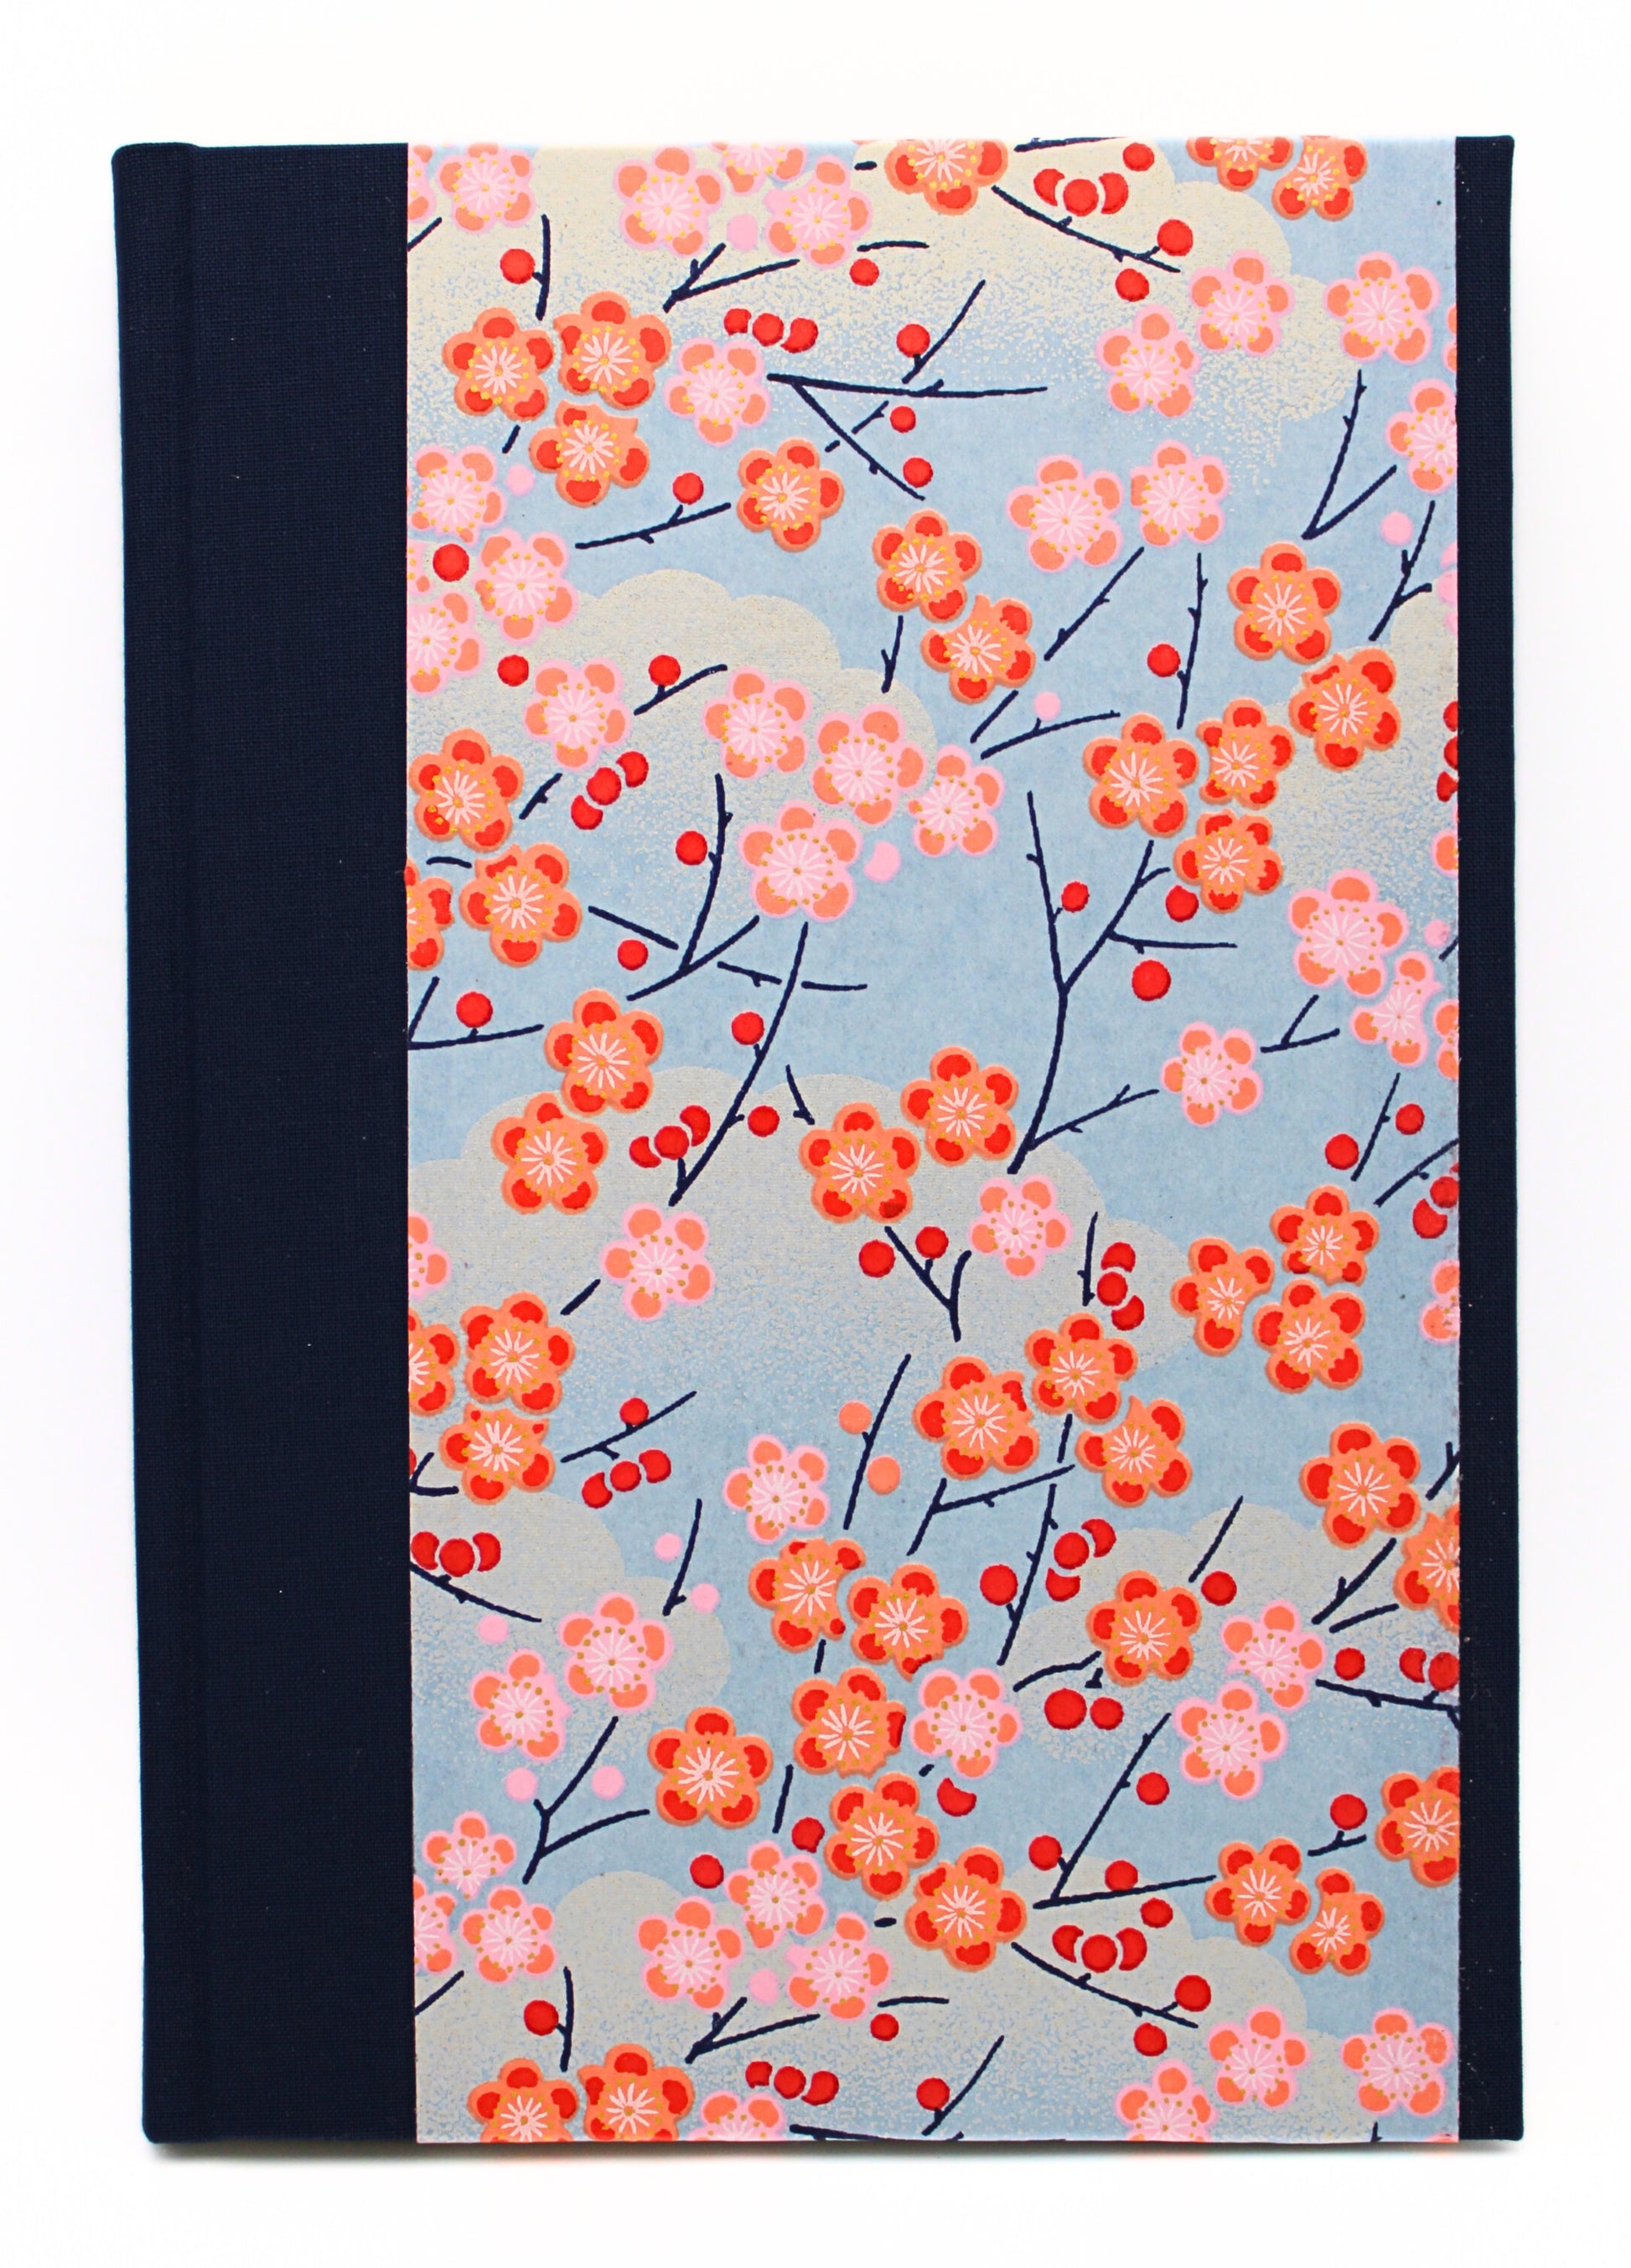 Hubert Bookbindery A5 Lined Notebook Blossom Love 